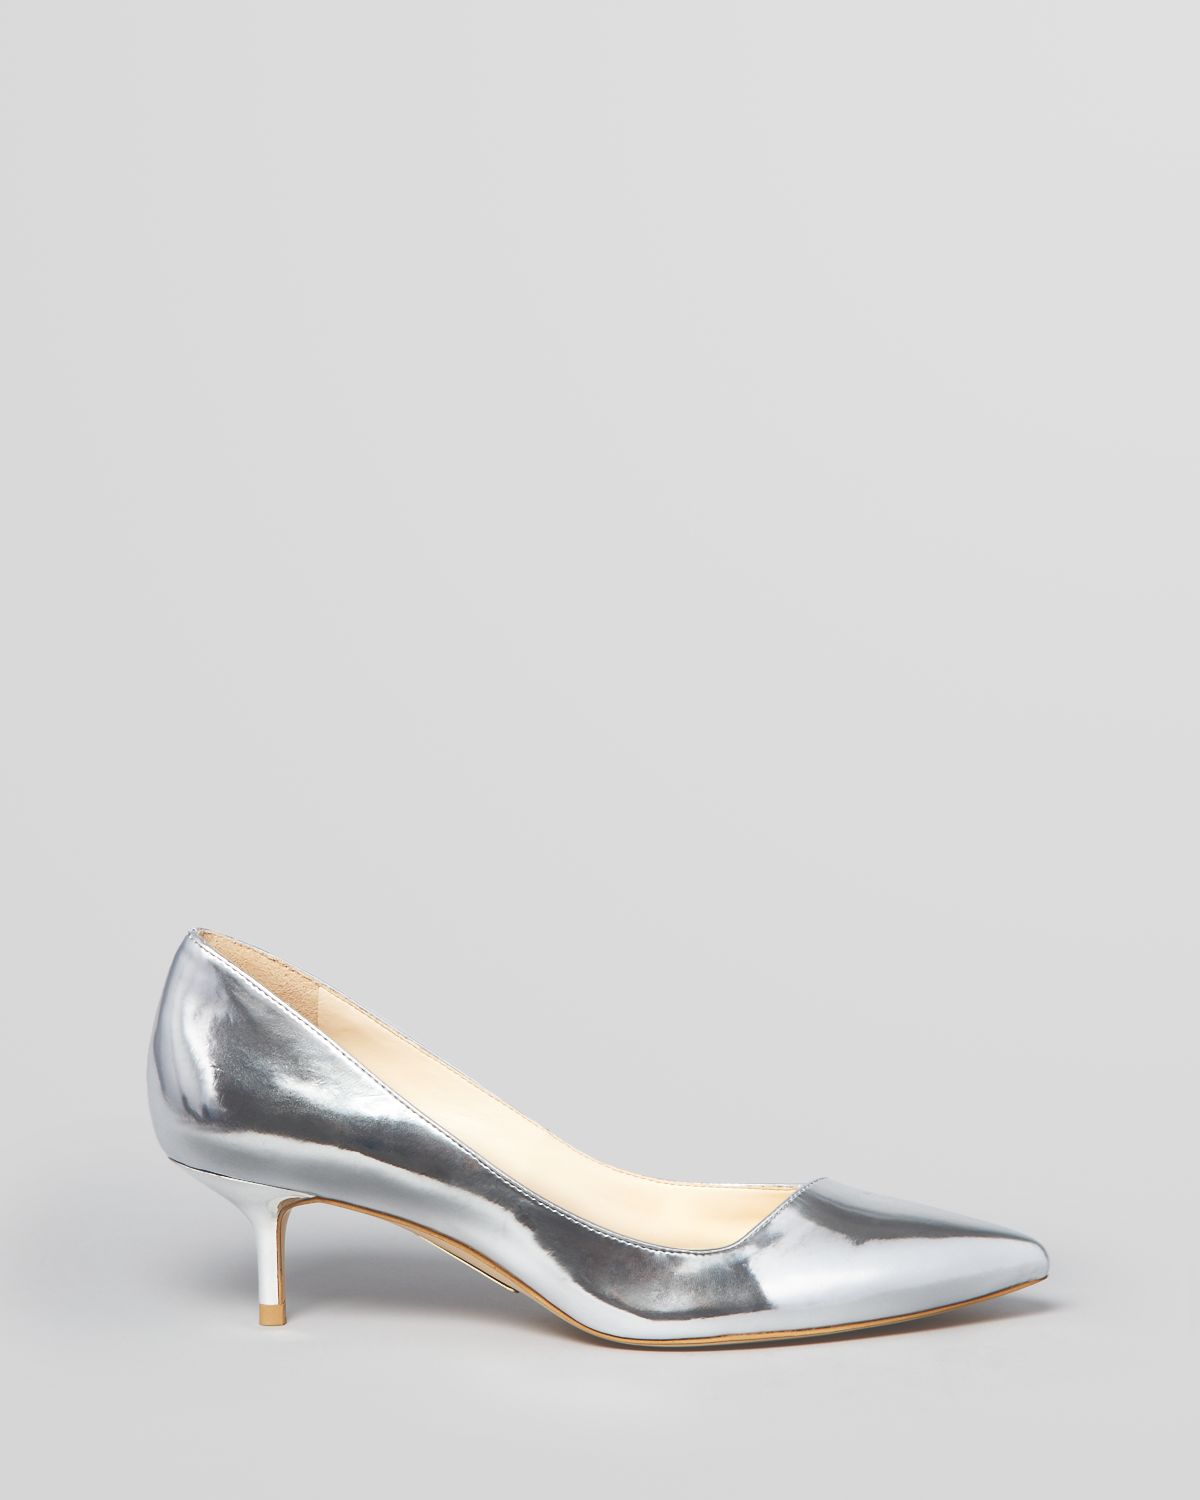 Lyst - Boutique 9 Pointed Toe Pumps Sophina Kitten Heel in Metallic